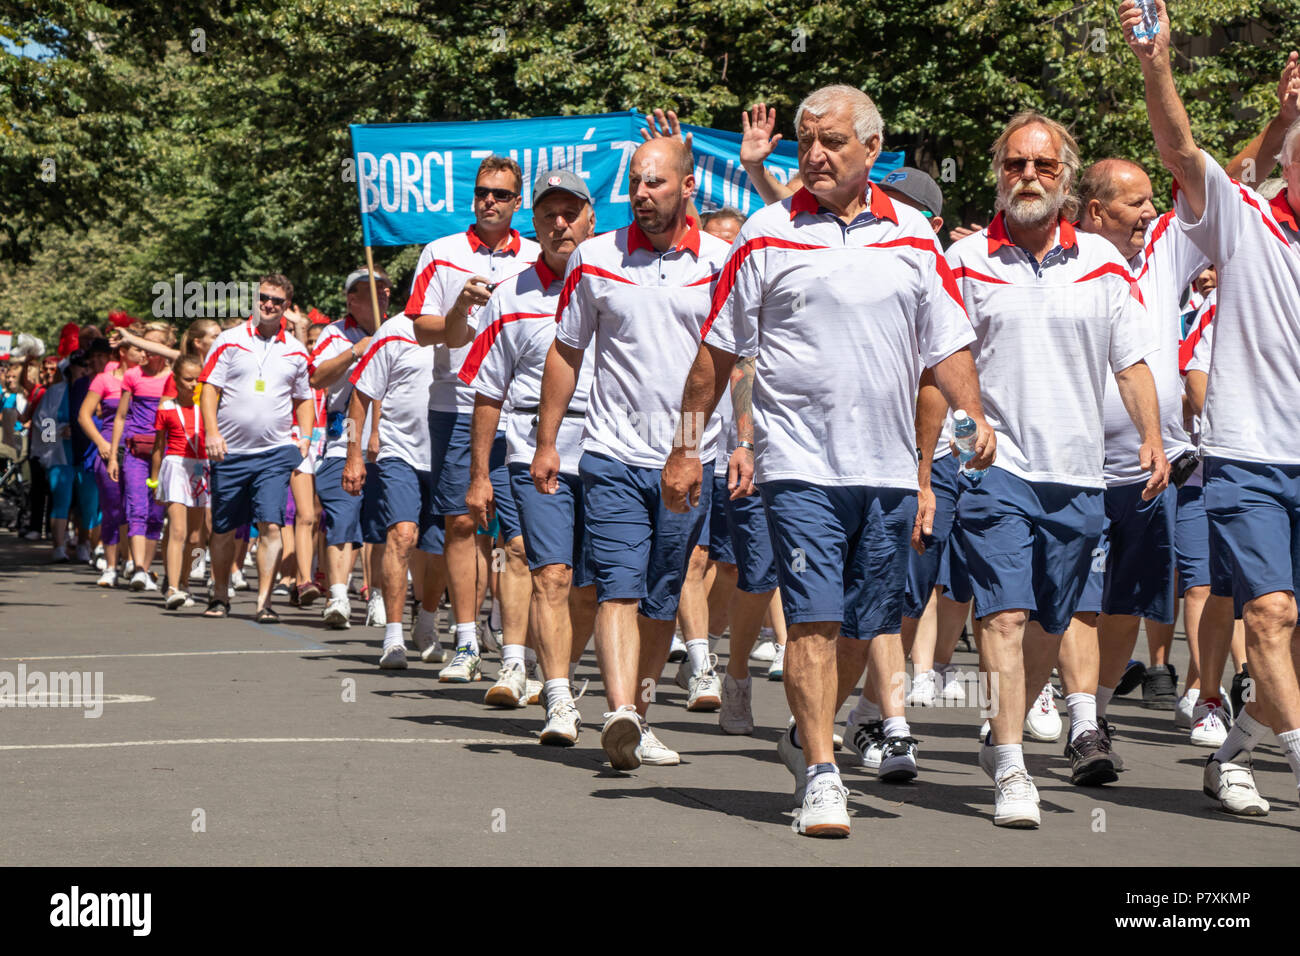 PRAGUE, CZECH REPUBLIC - JULY 1, 2018: Men parading at Sokolsky Slet, a once-every-six-years gathering of the Sokol movement - a Czech sports associat Stock Photo